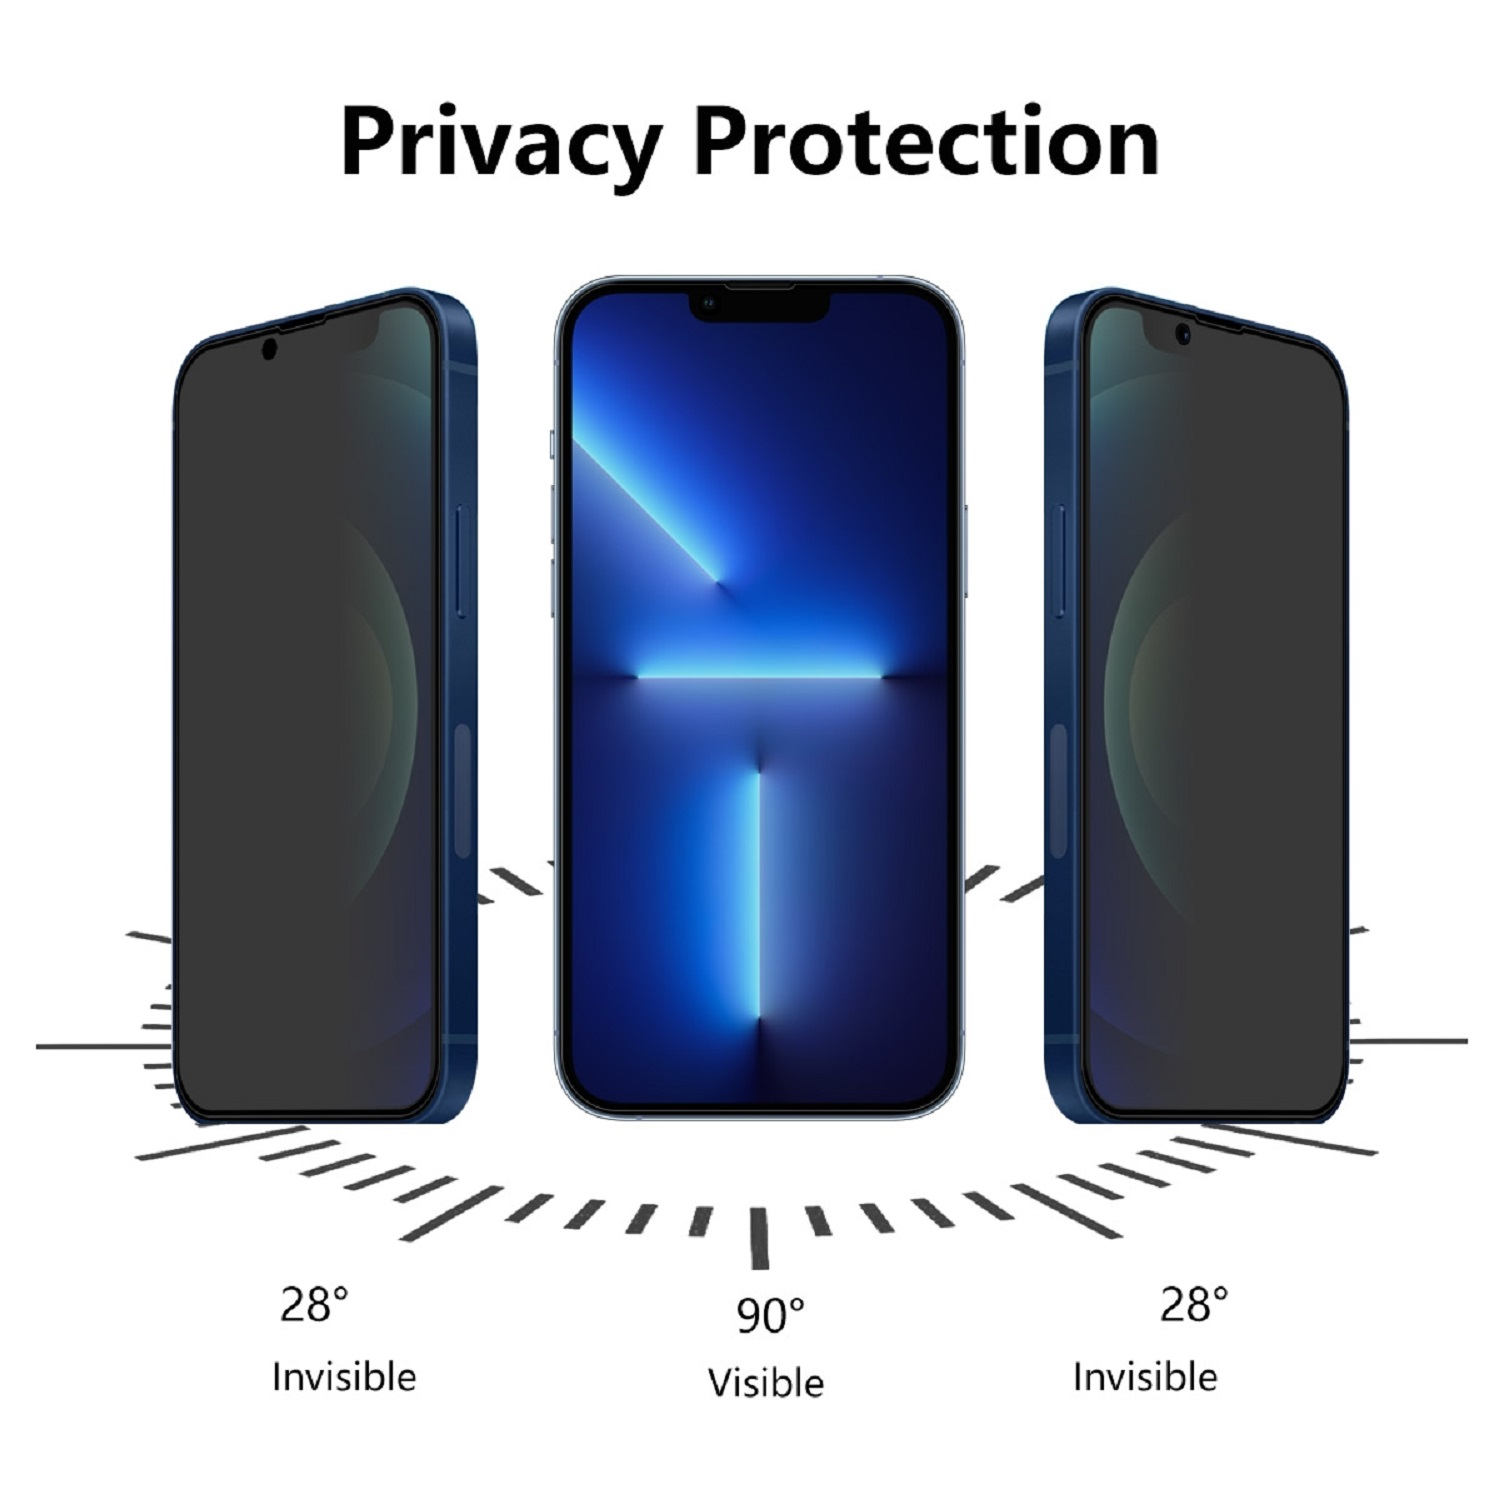 PROTECTORKING 2x FULL COVER 9H Privacy Apple Displayschutzfolie(für 13) iPhone ANTI-SPY Schutzglas